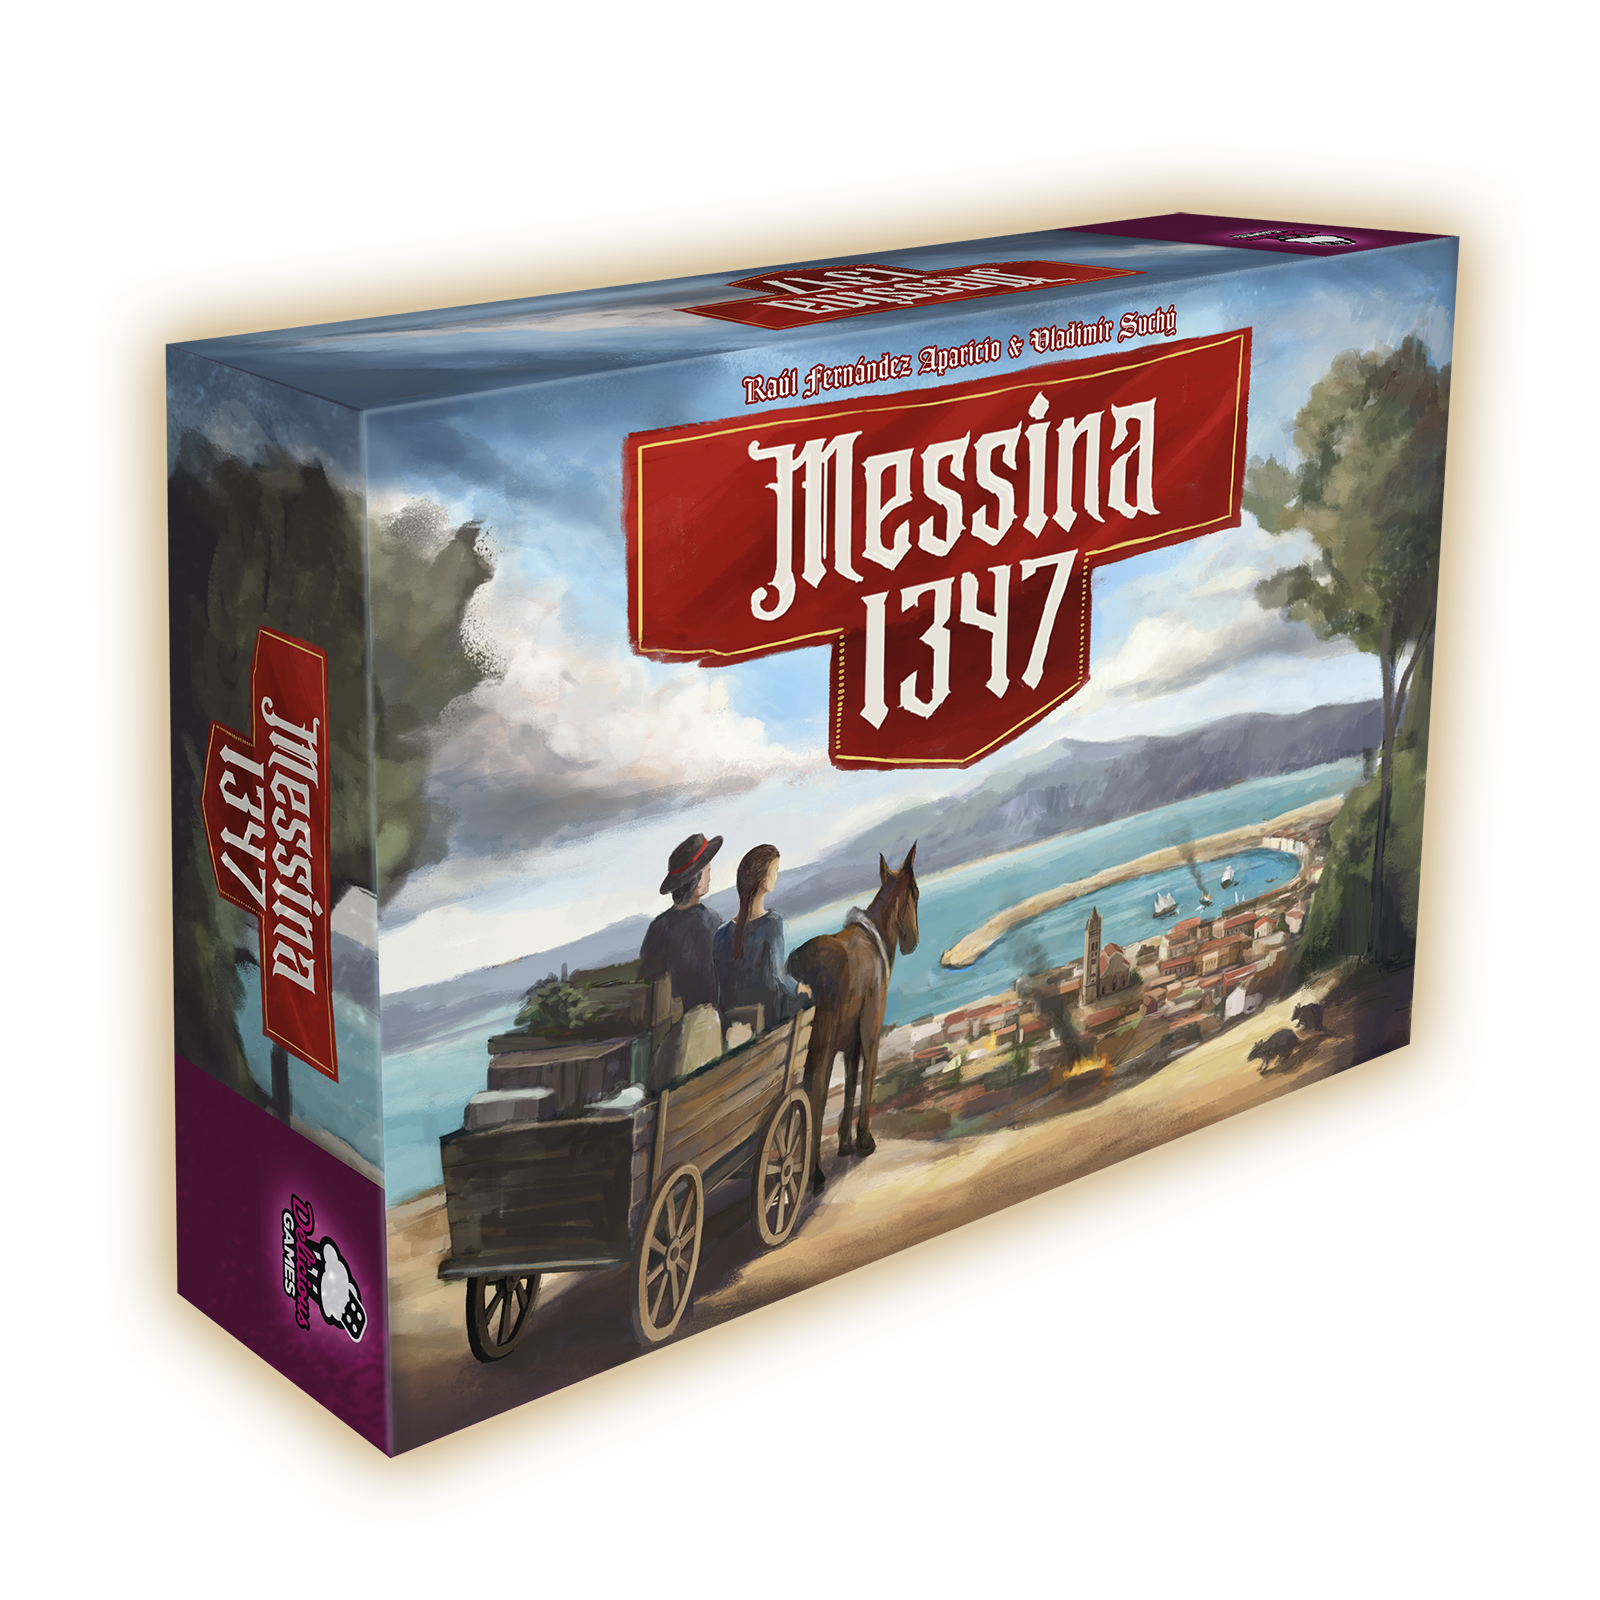 Messina-3Dbox-1600x1600-1600x1600.png